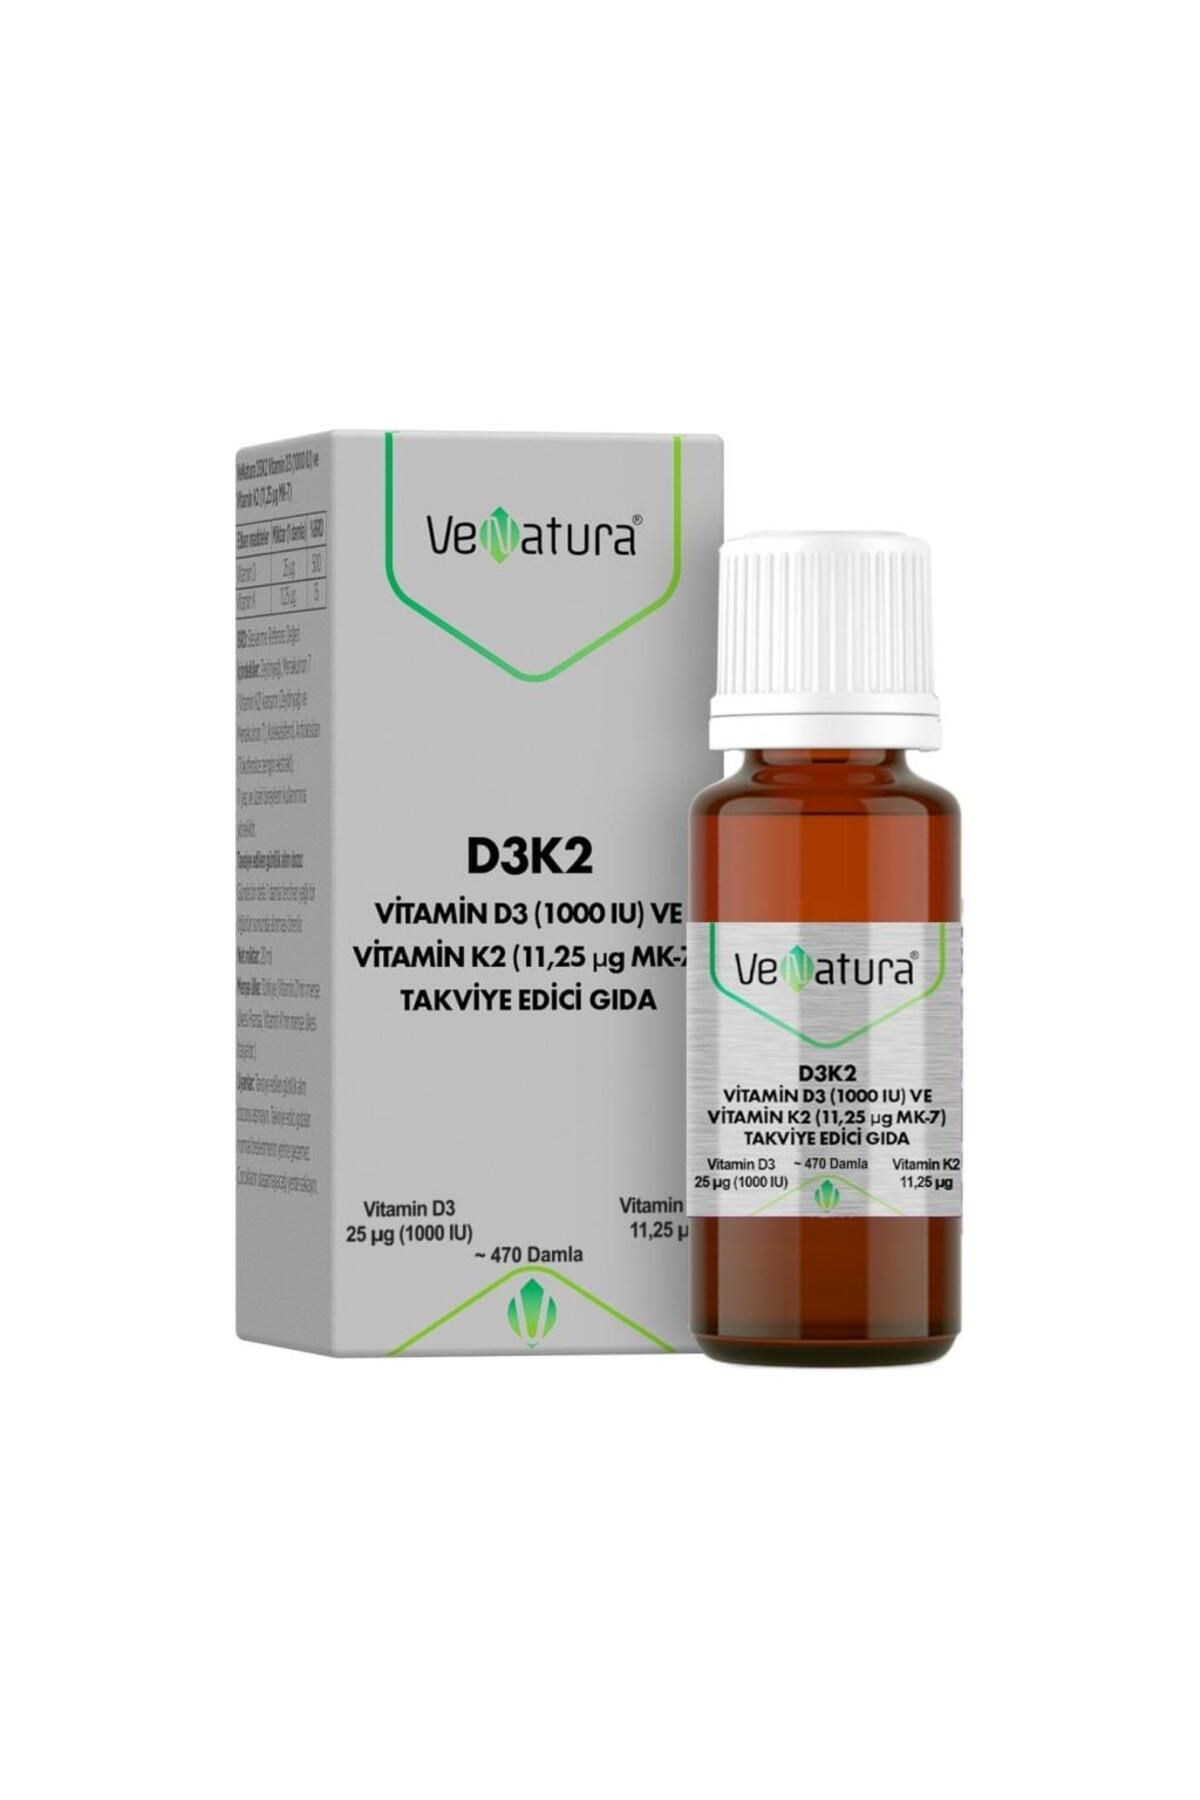 Venatura Vitamin D3(1000 IU) Ve K2 (11,25 UG MK-7) 20 ml